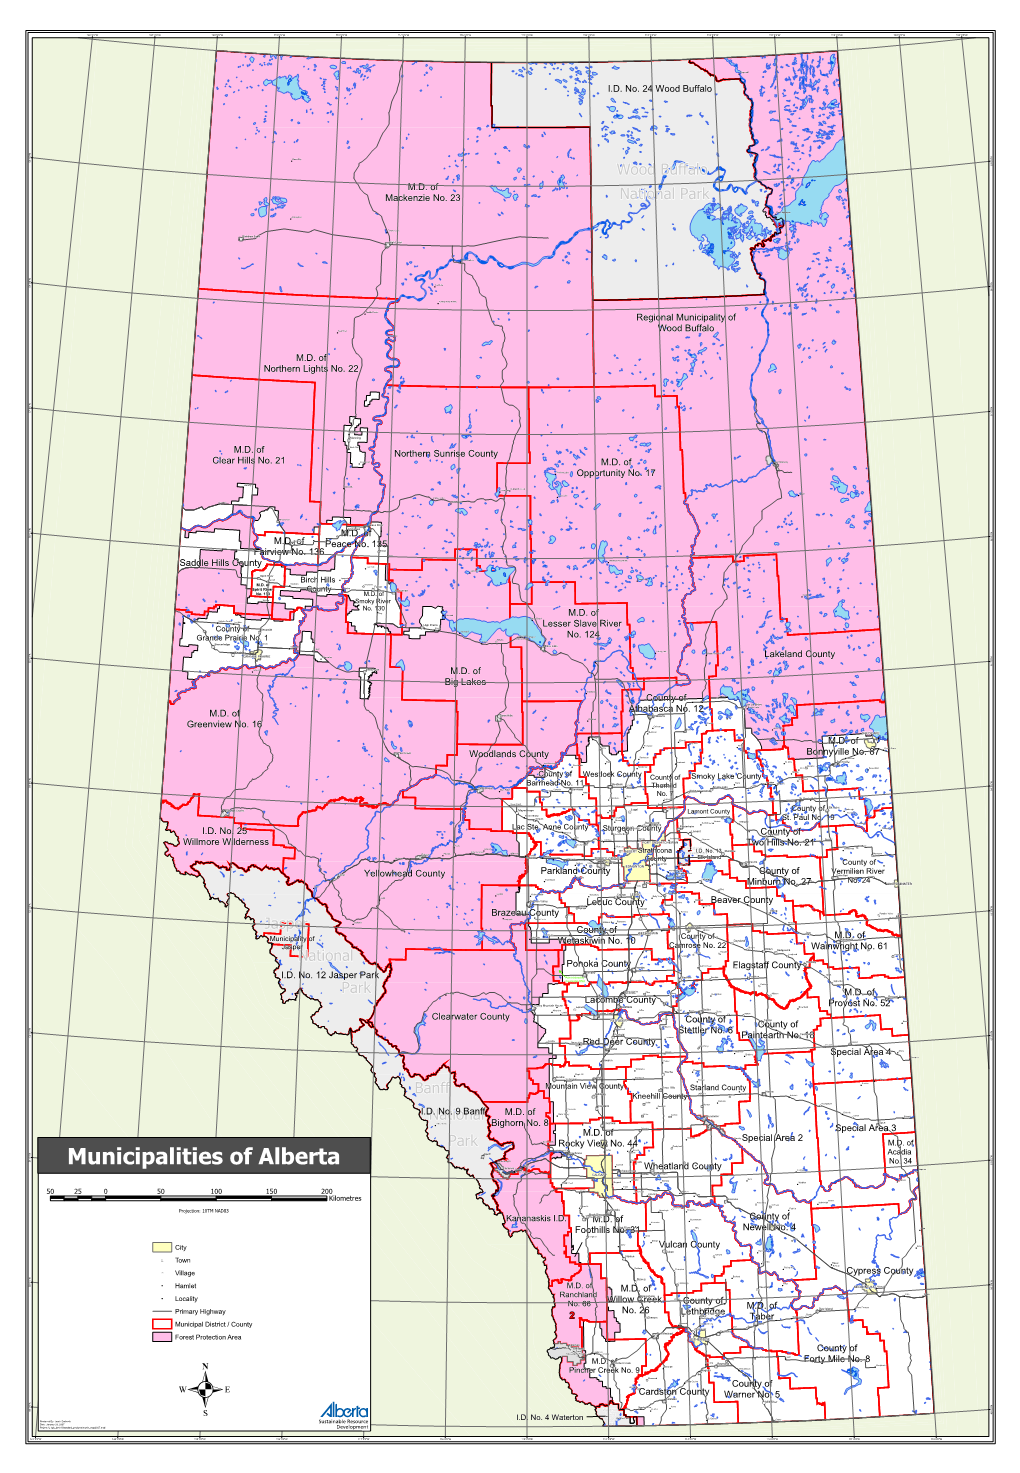 Municipalities of Alberta Lac Des Arcs CALGARY Cheadle Strathmore